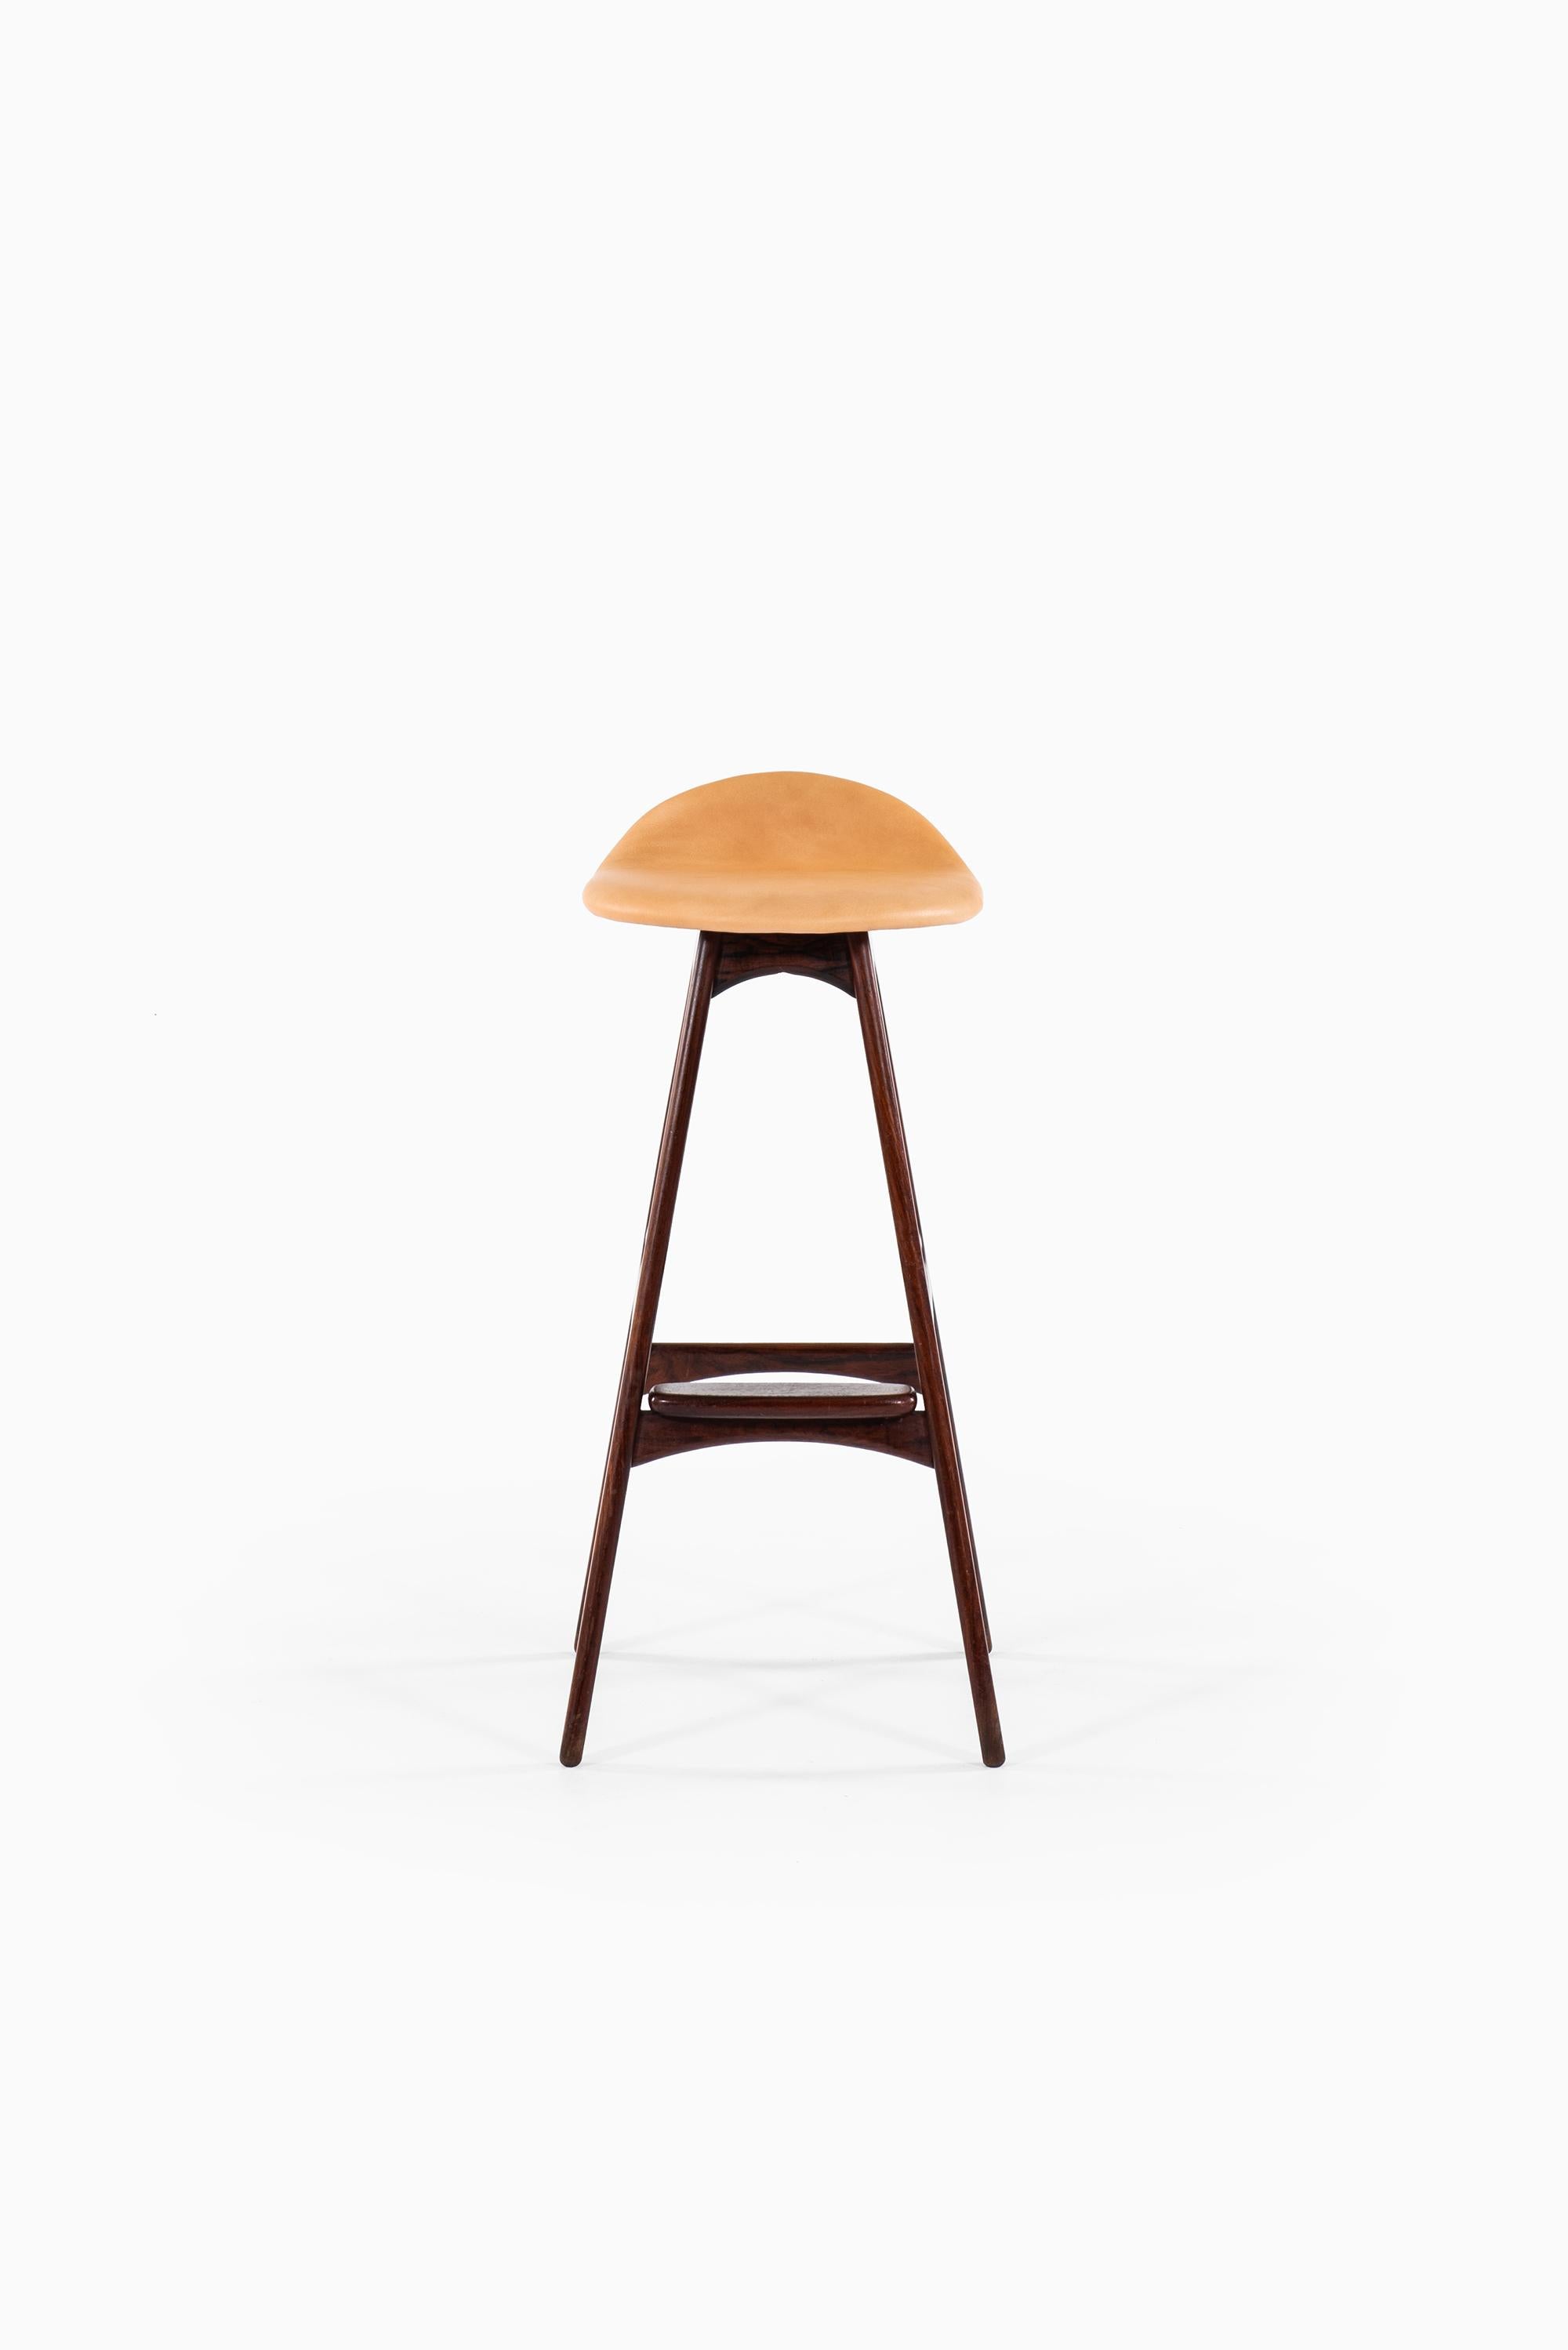 Rare set of 3 bar stools model OD-61 designed by Erik Buch. Produced by Oddense Møbelfabrik in Denmark.